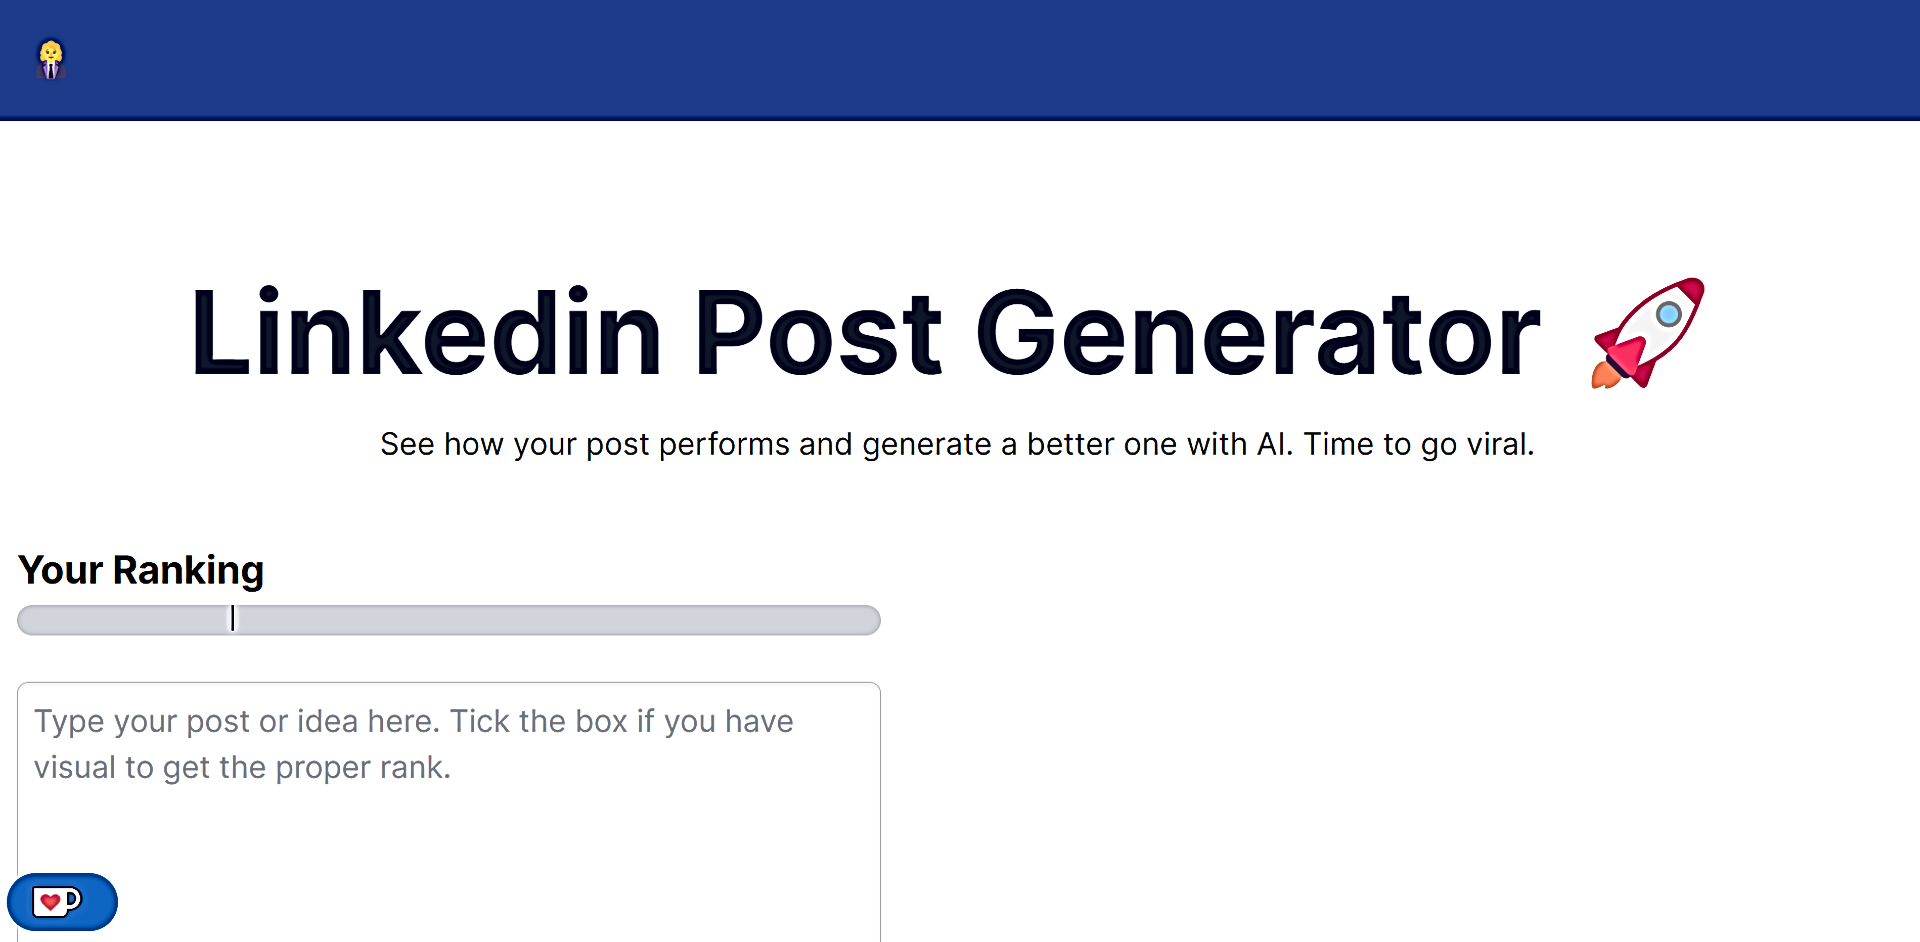 LinkedIn Post Generator featured